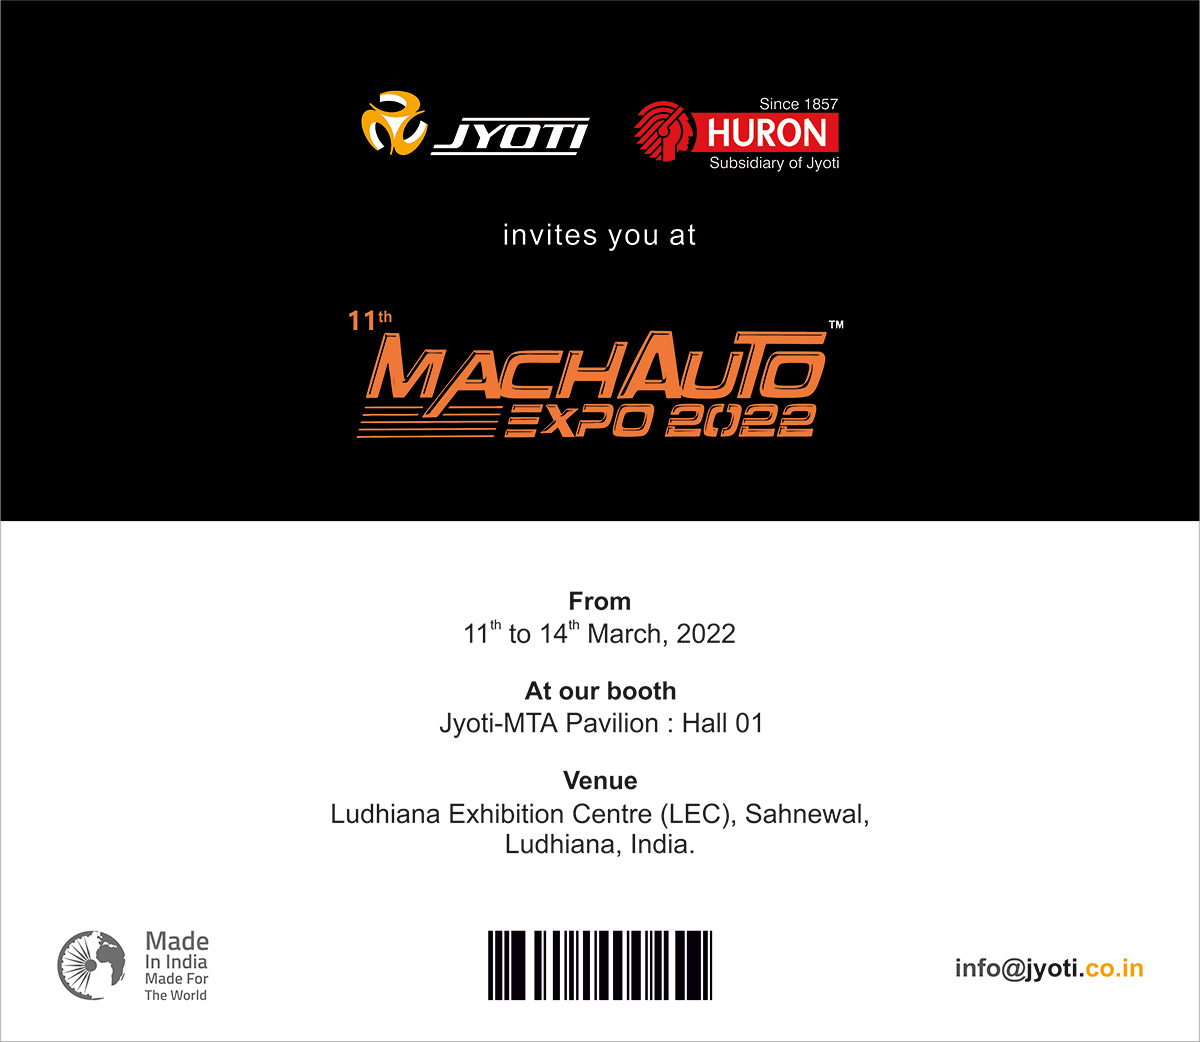 Invitation to visit us at Jyoti Pavilion, Mach Auto Expo 2022